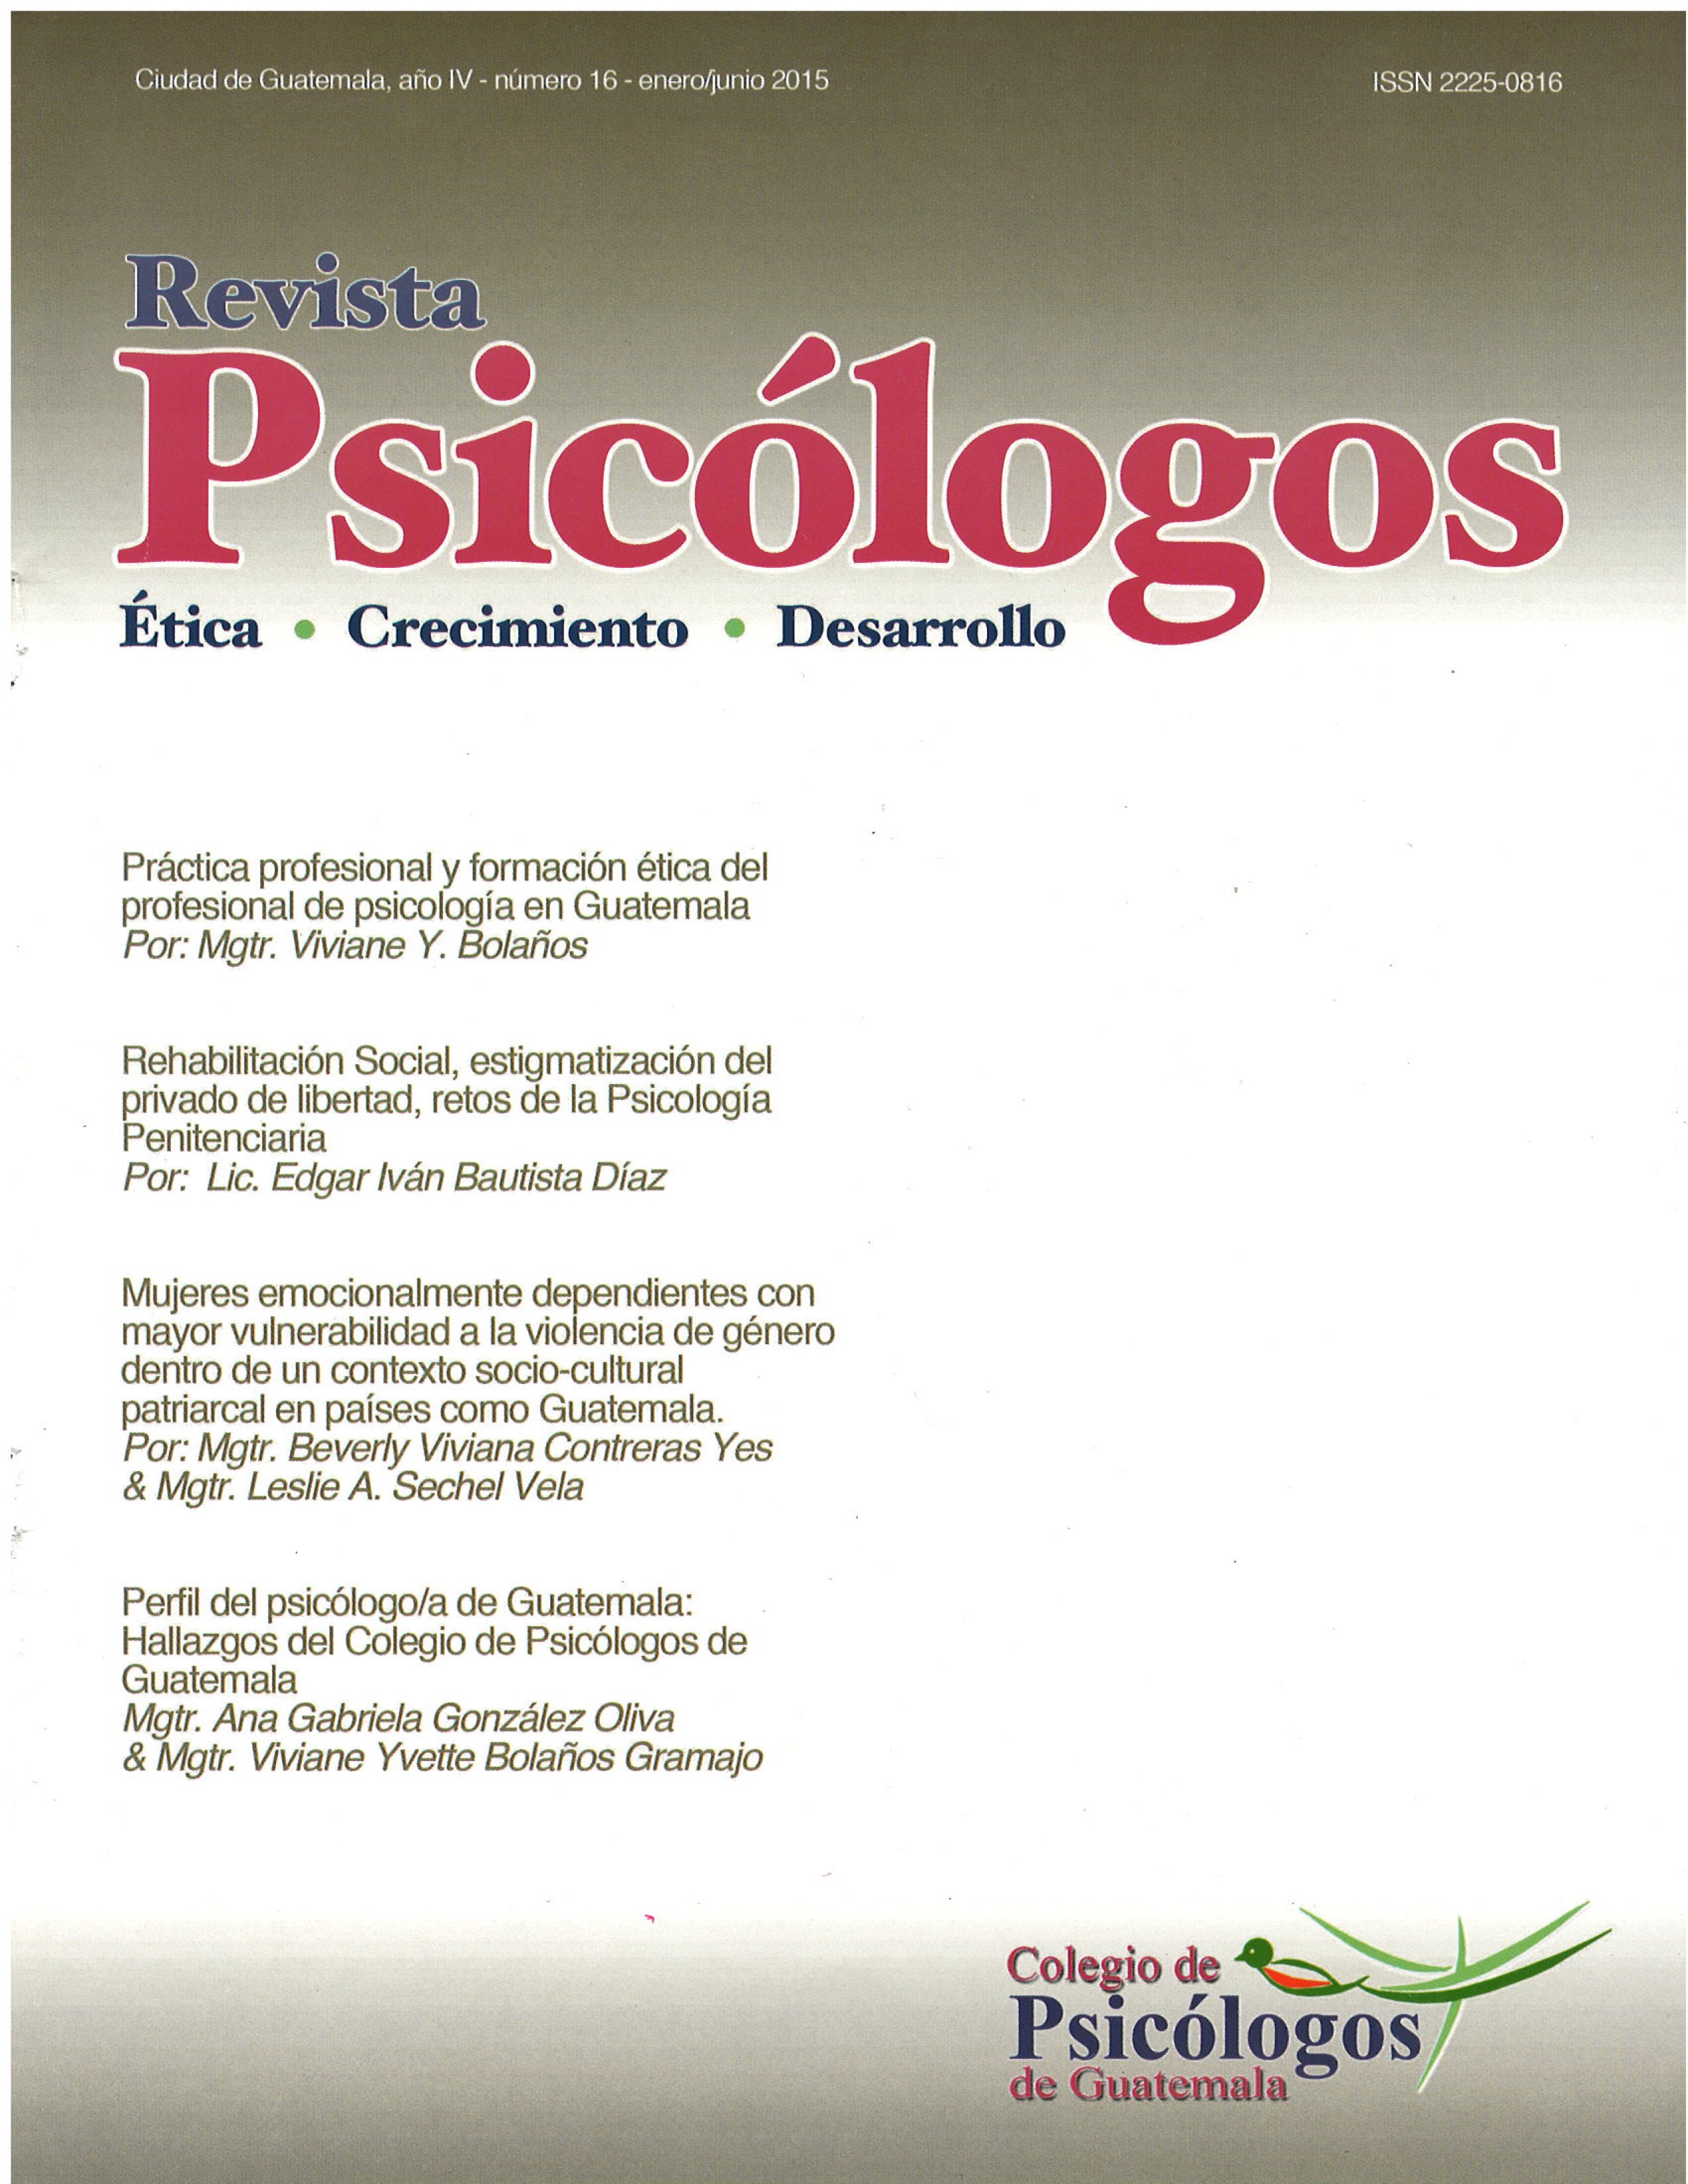 					Ver Vol. 6 Núm. 16 (2015): Revista Psicólogos No. 16
				